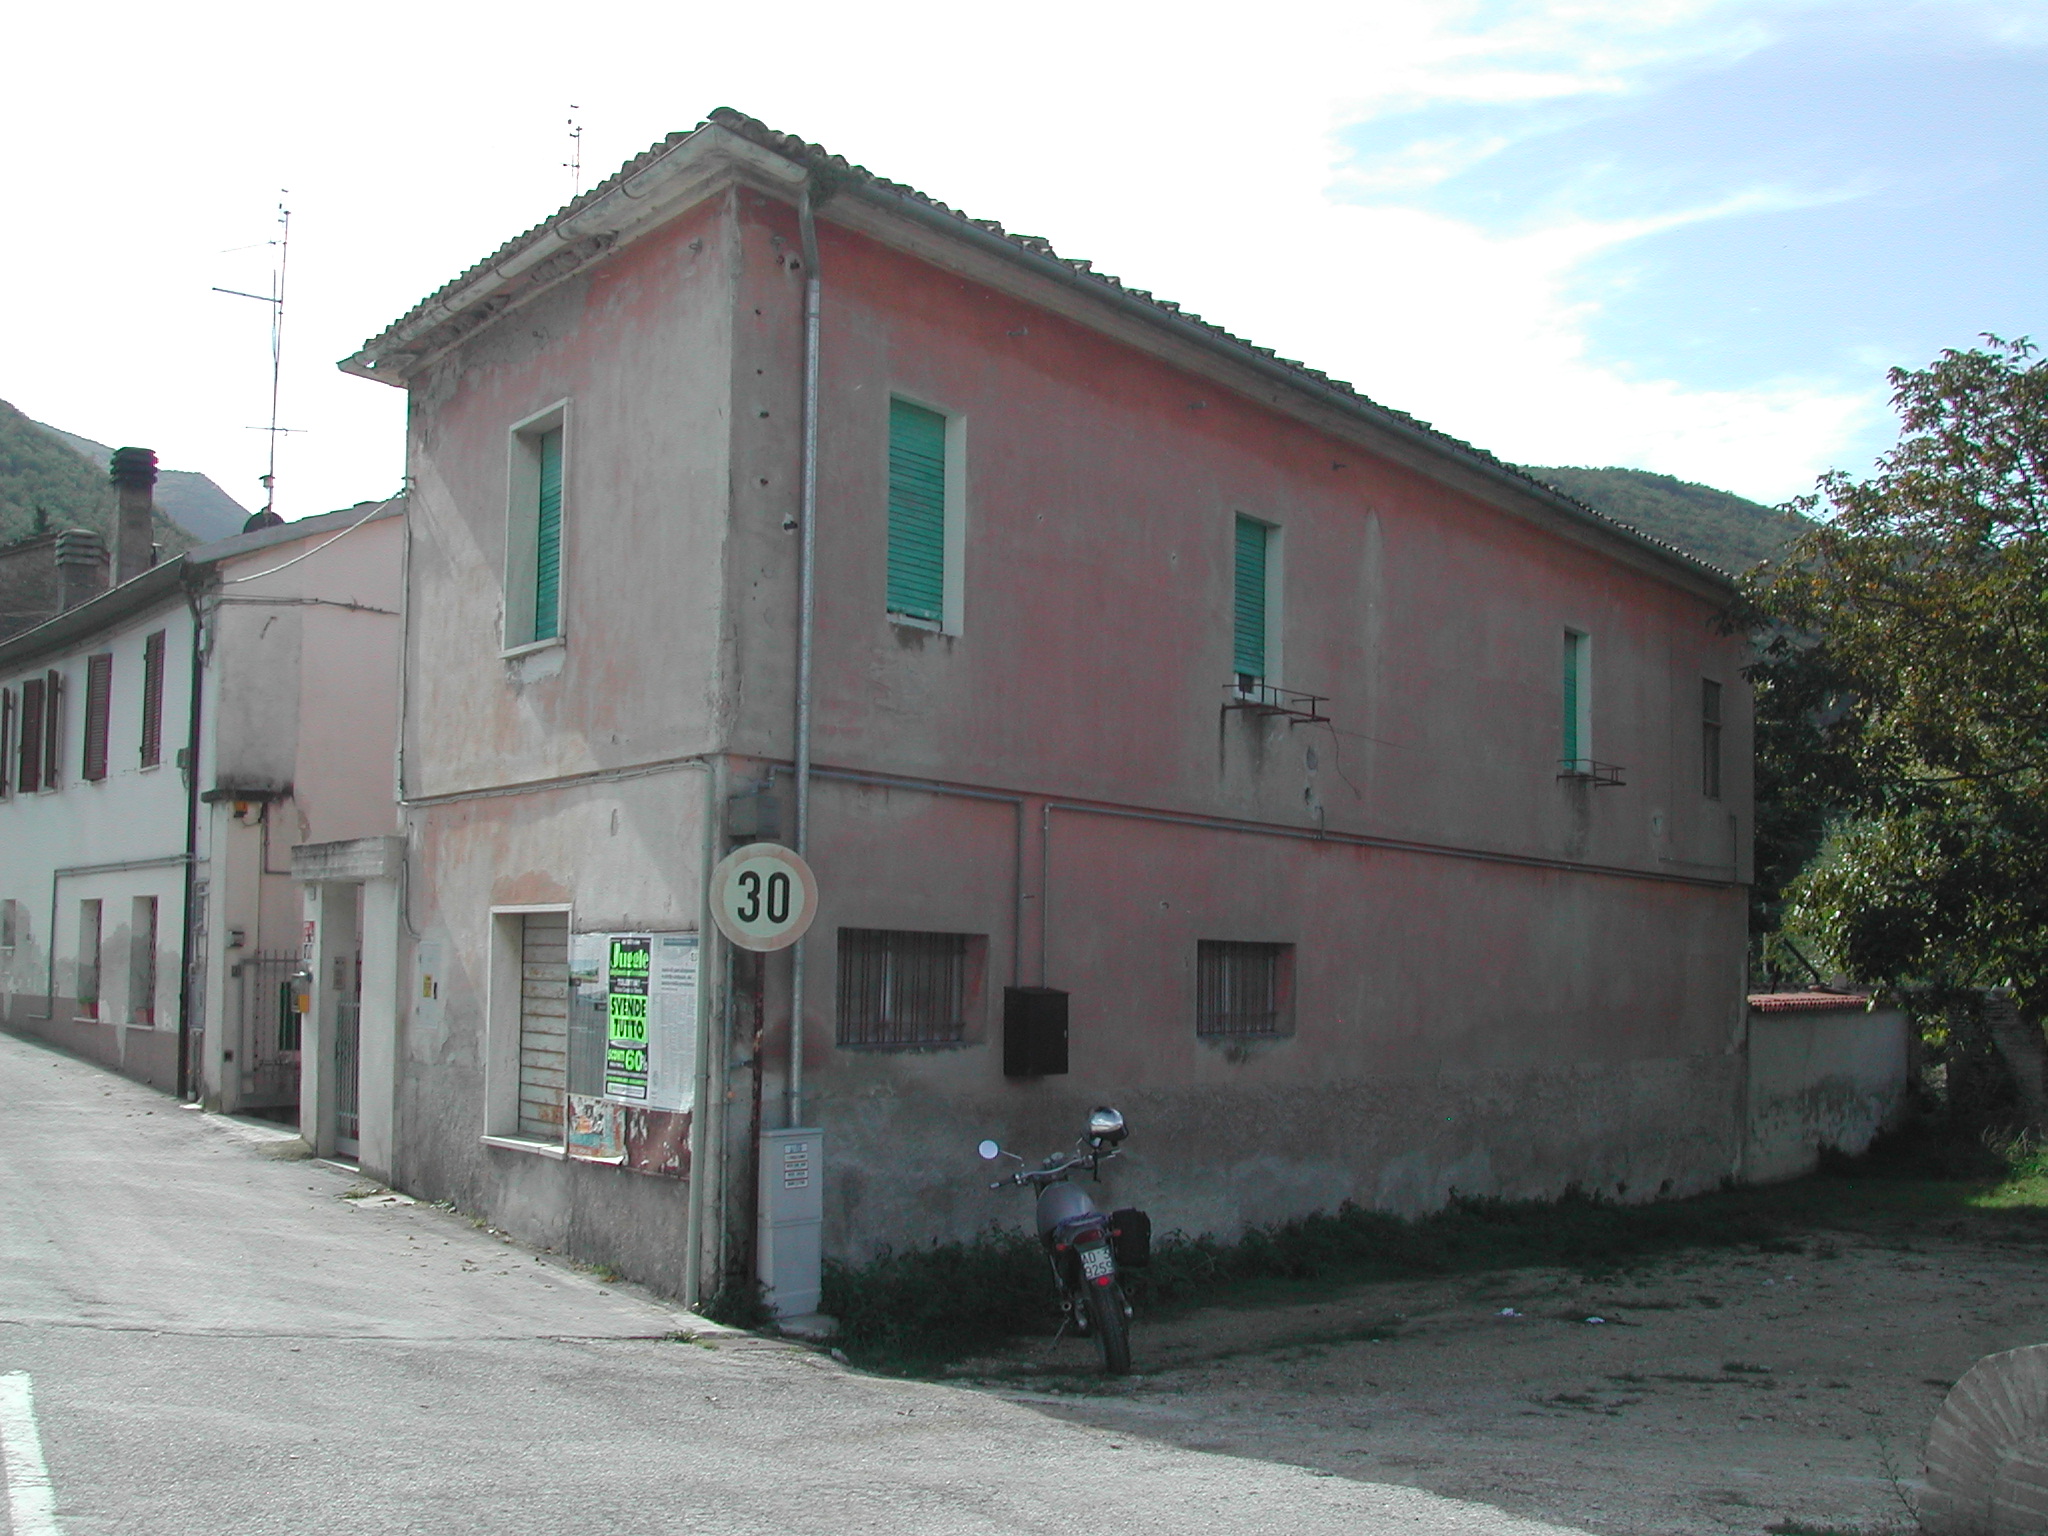 Casa isoalta (casa isolata) - San Severino Marche (MC) 